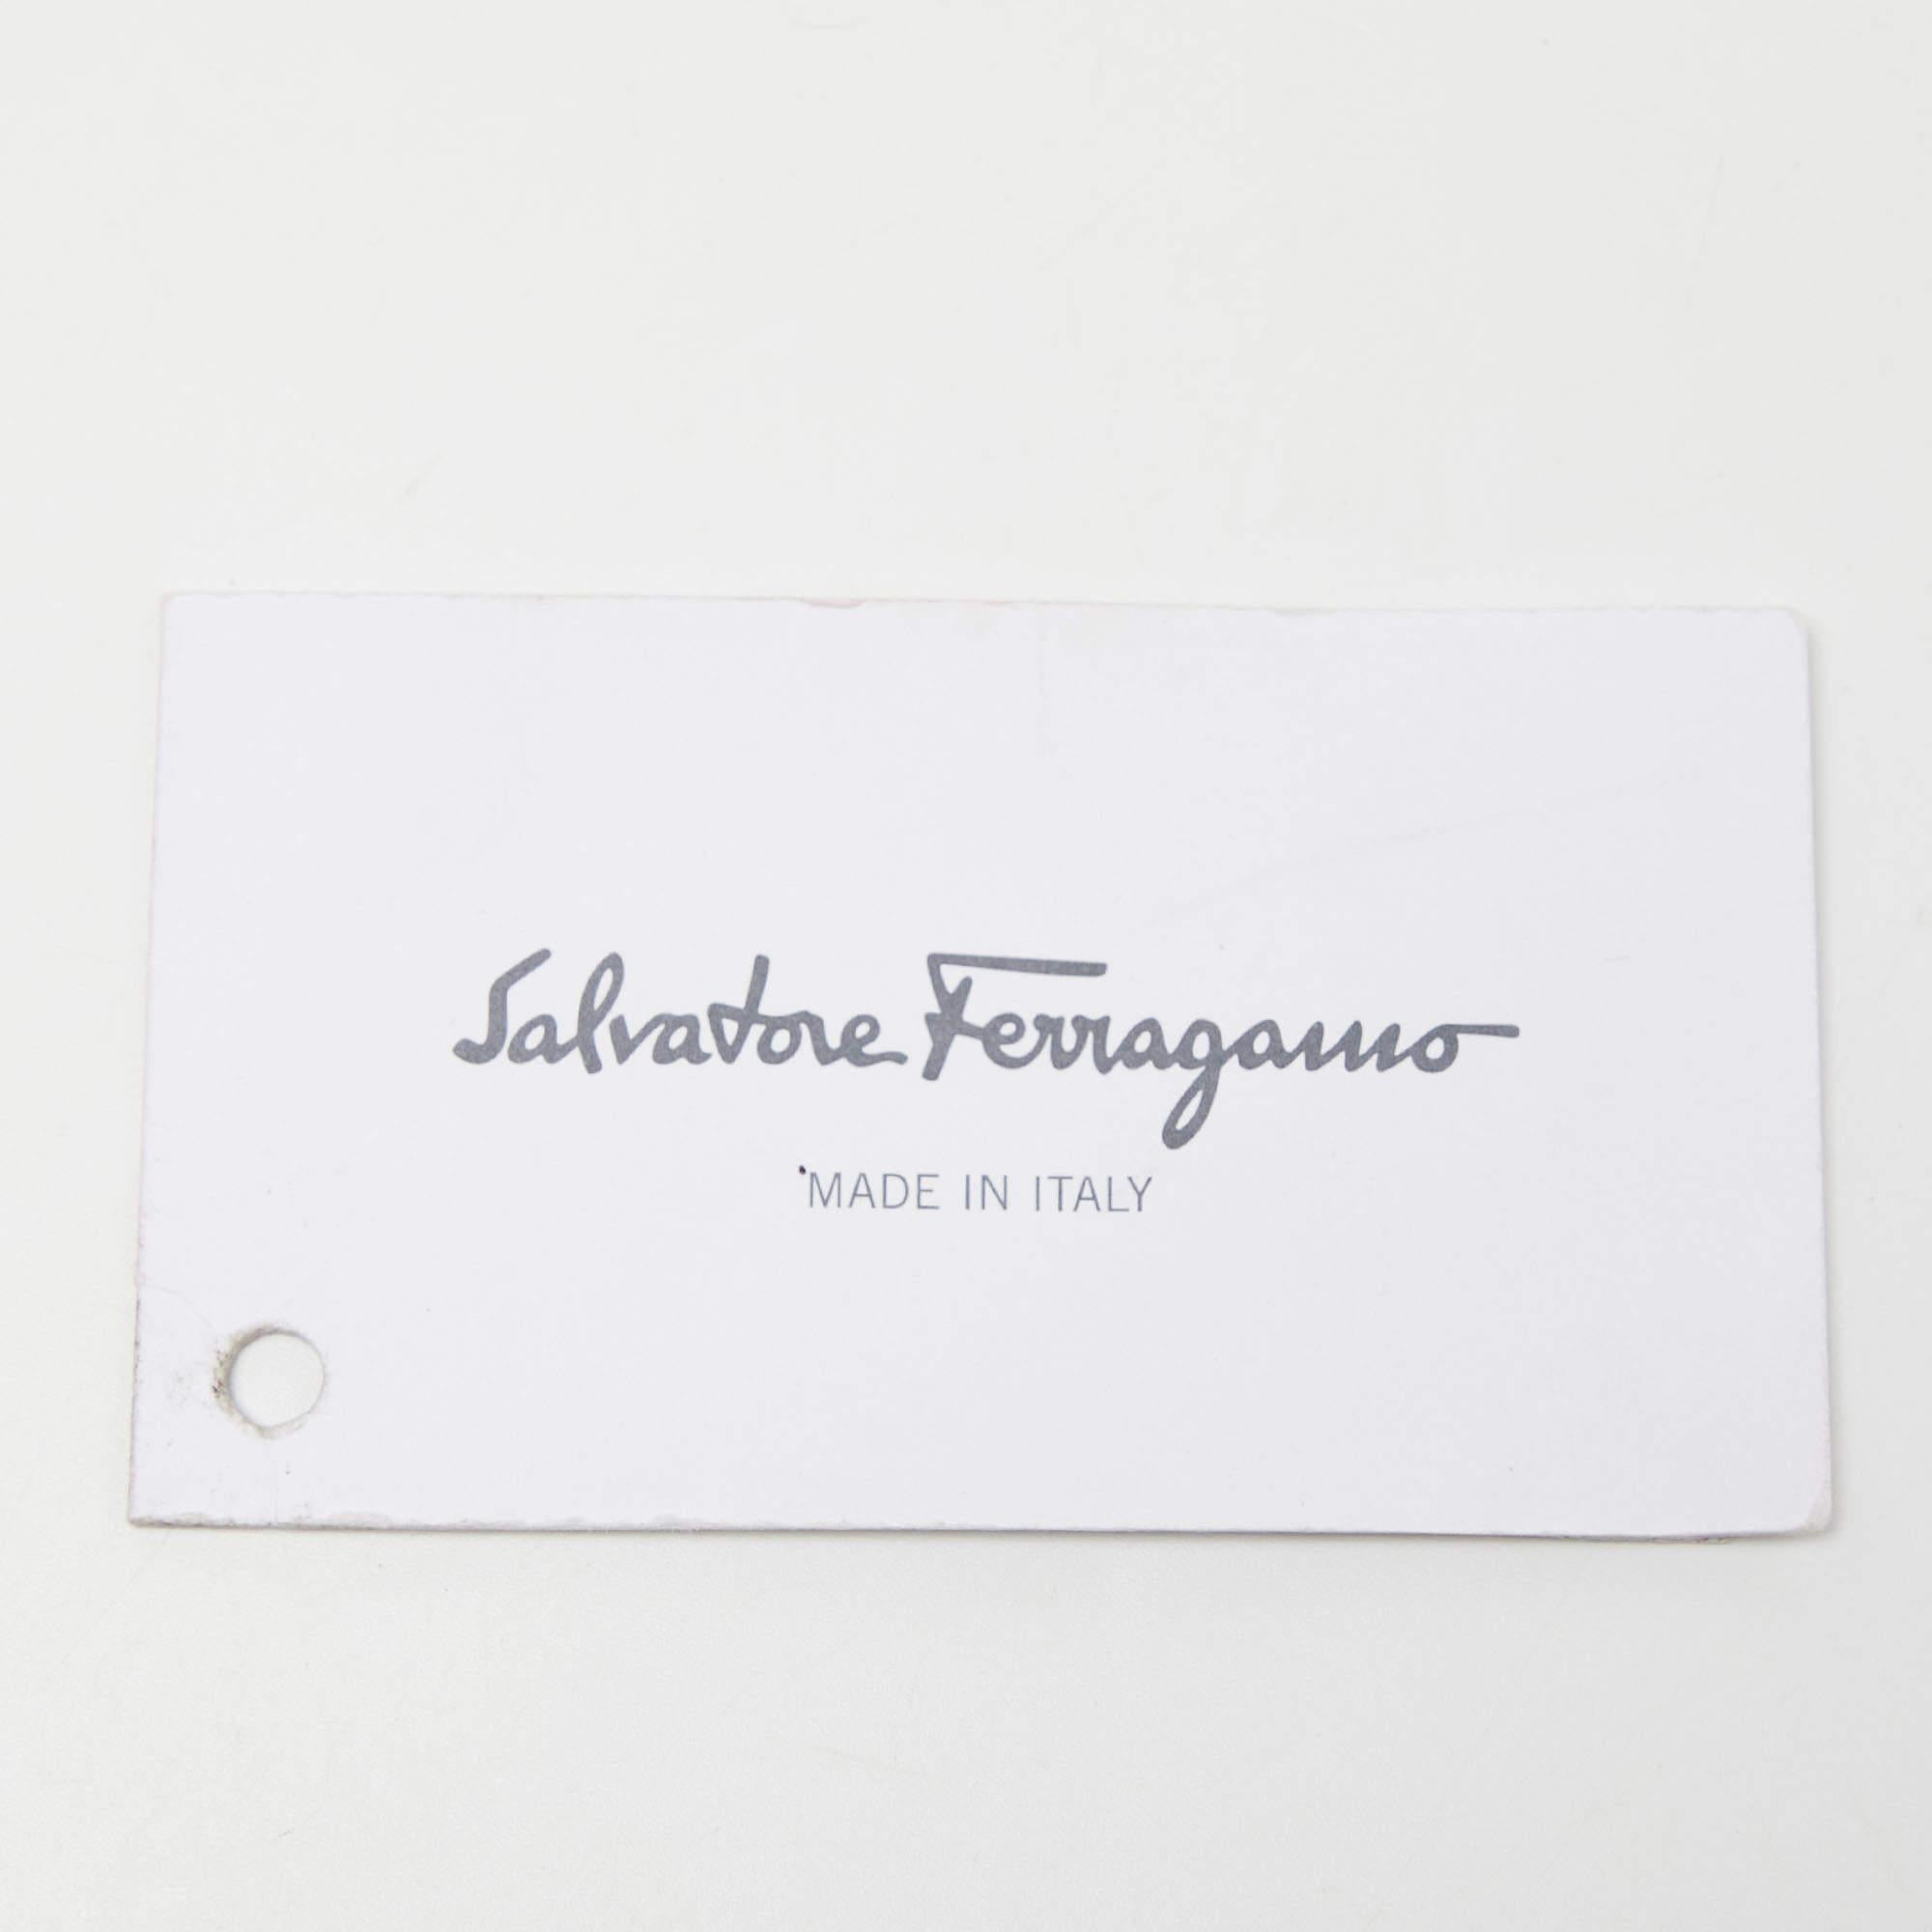 Salvatore Ferragamo Silver Glitter and Laminated Leather Top Handle Bag 5